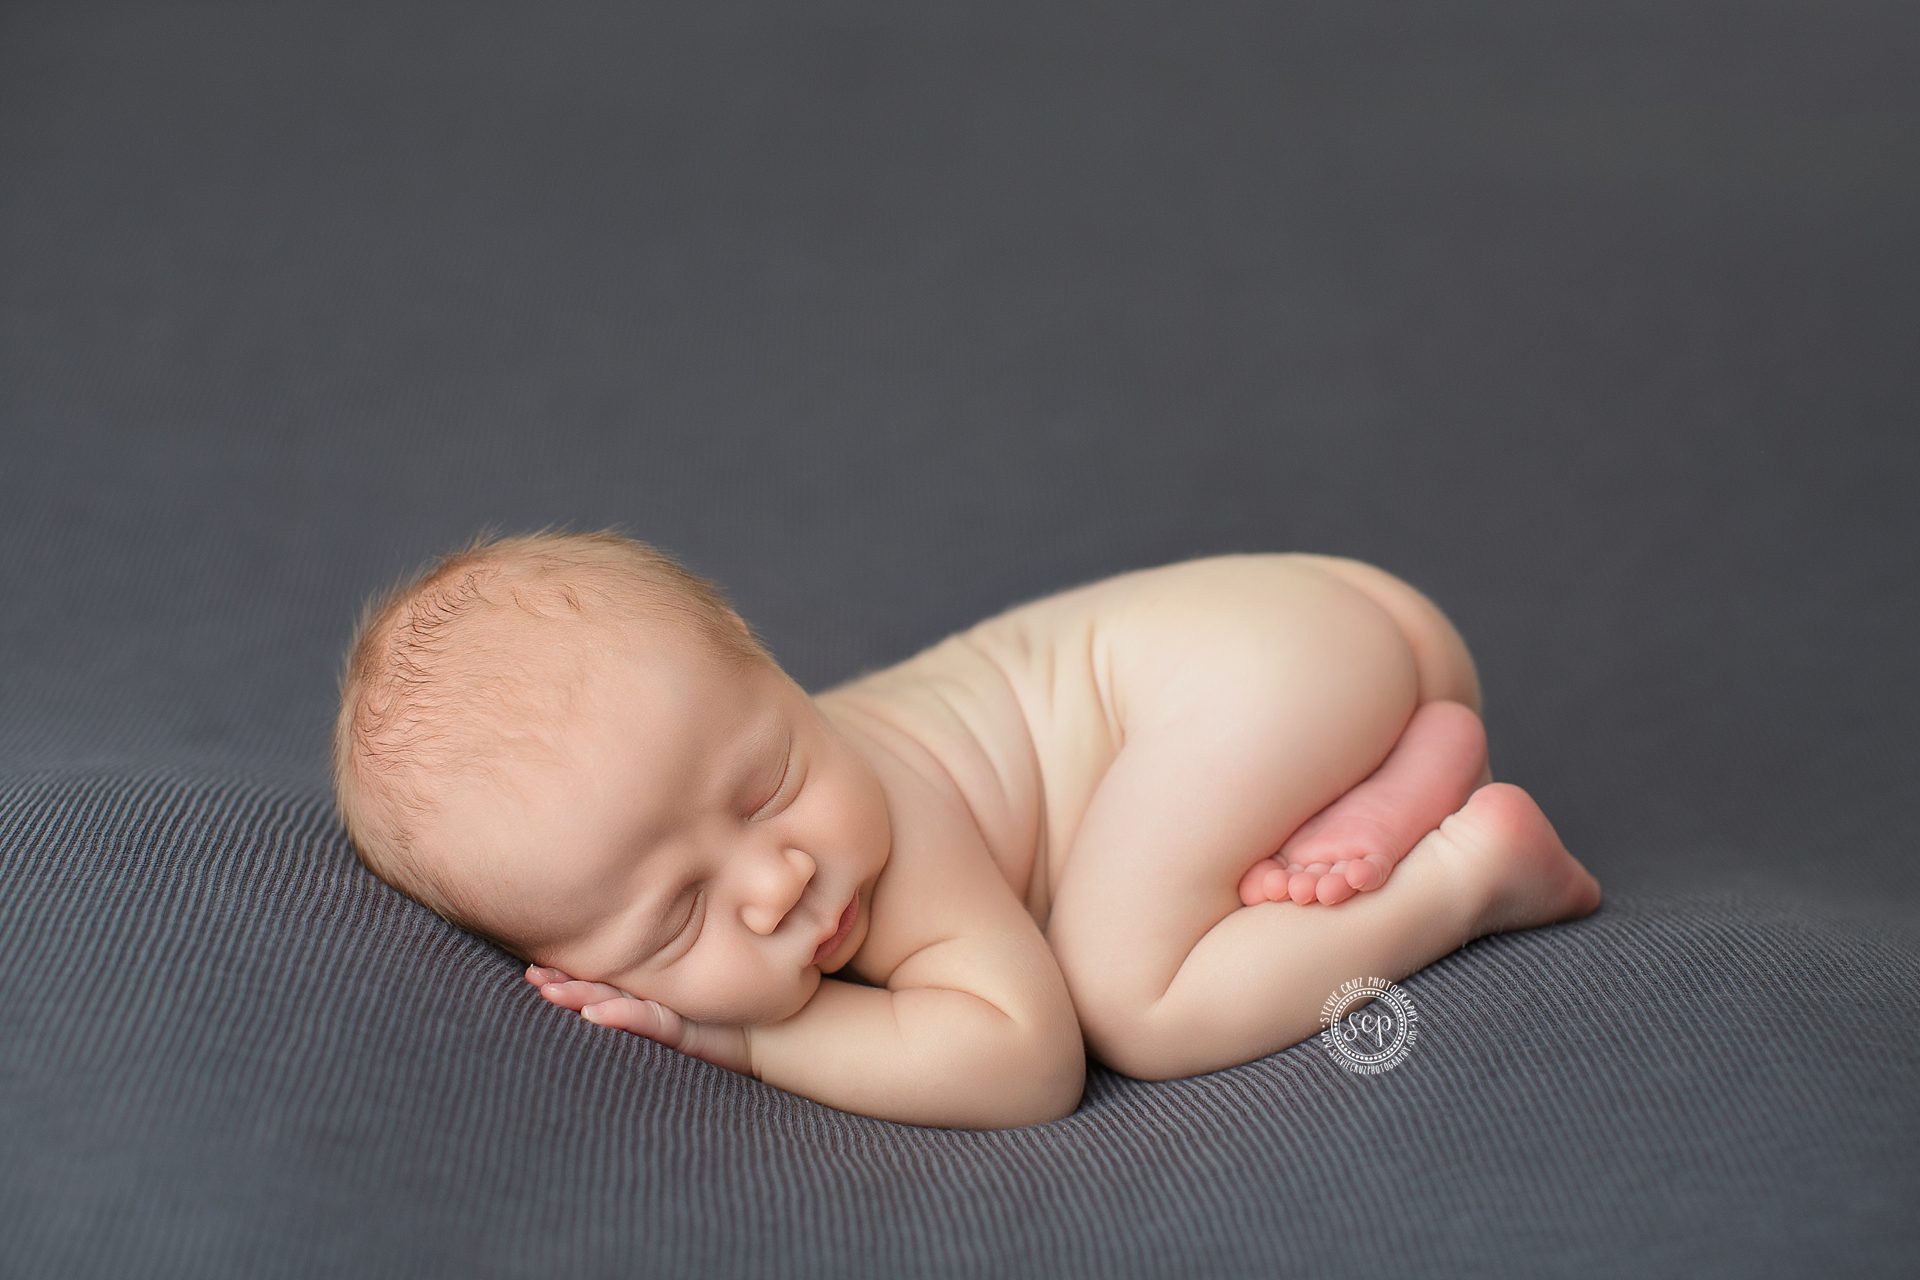 Local baby photographer in Yorba Linda captures this cute newborn baby boy